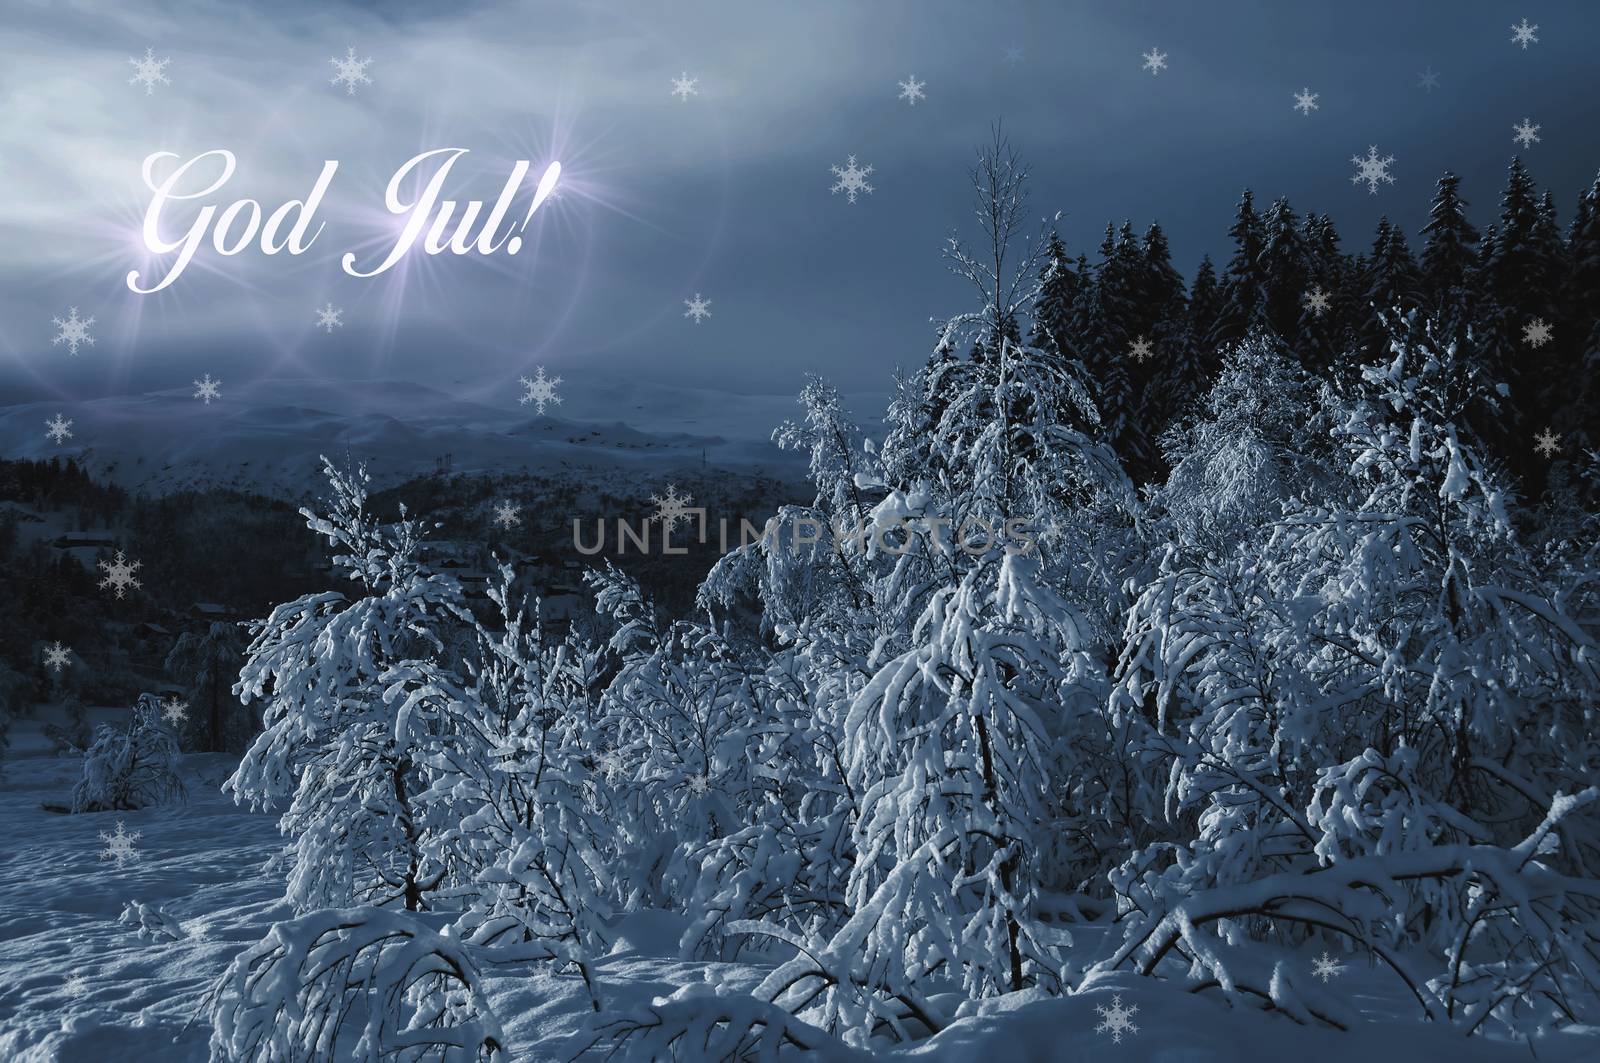 Merry Christmas in Winter wonderland by GryT